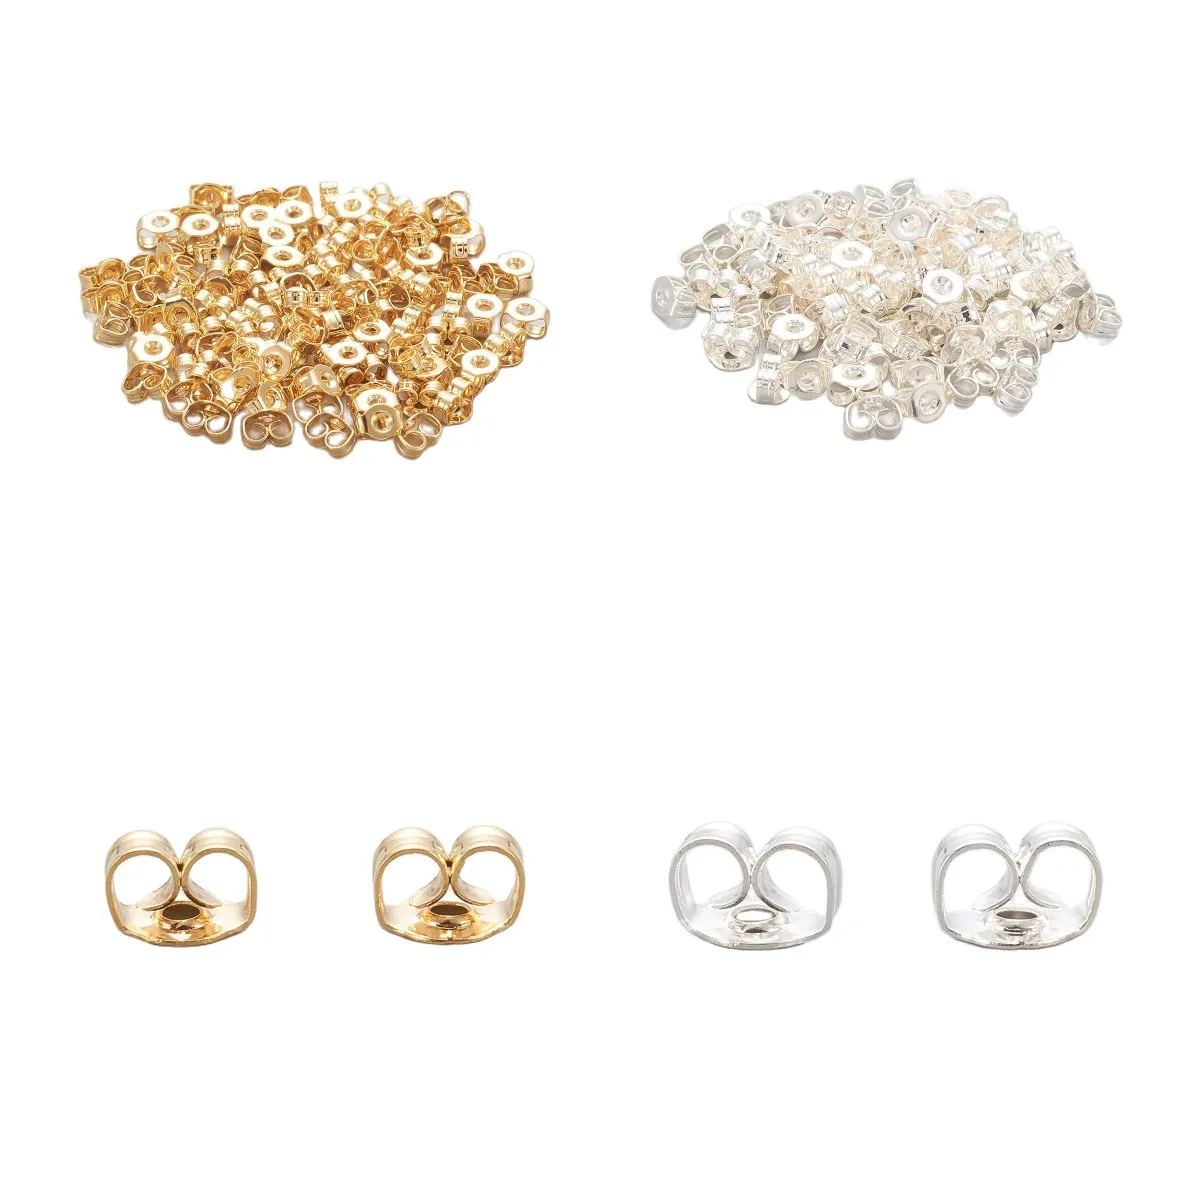 

Kissitty 50Pcs/Lot Gold Color Stainless Steel Ear Nuts Clutch Earring Stoppers Post Stud Earrings Backs Jewelry Findings